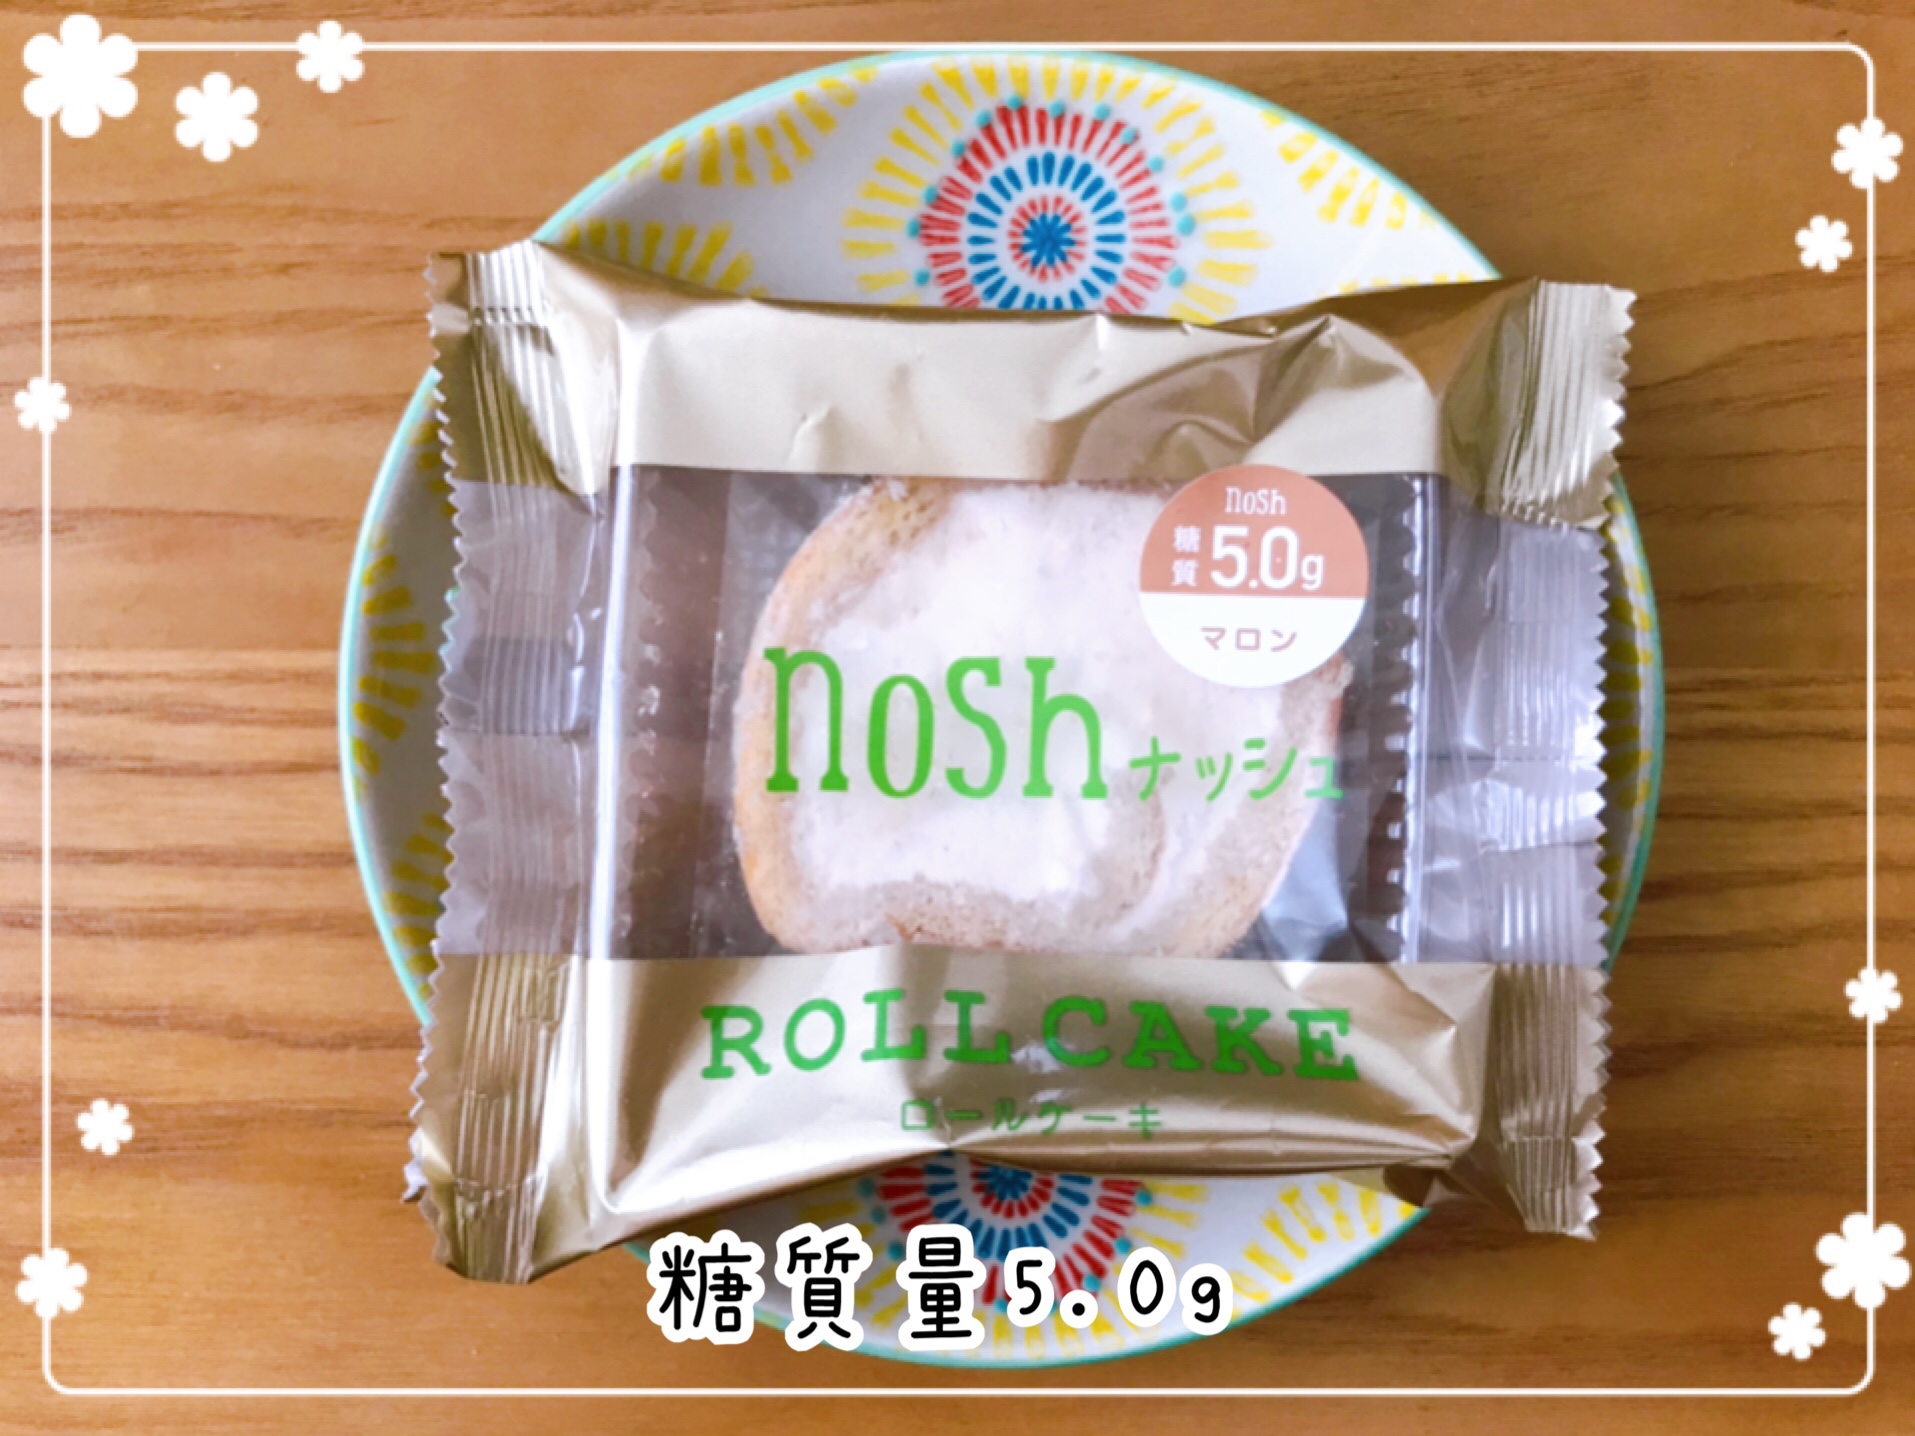 nosh(ナッシュ)ロールケーキの口コミ